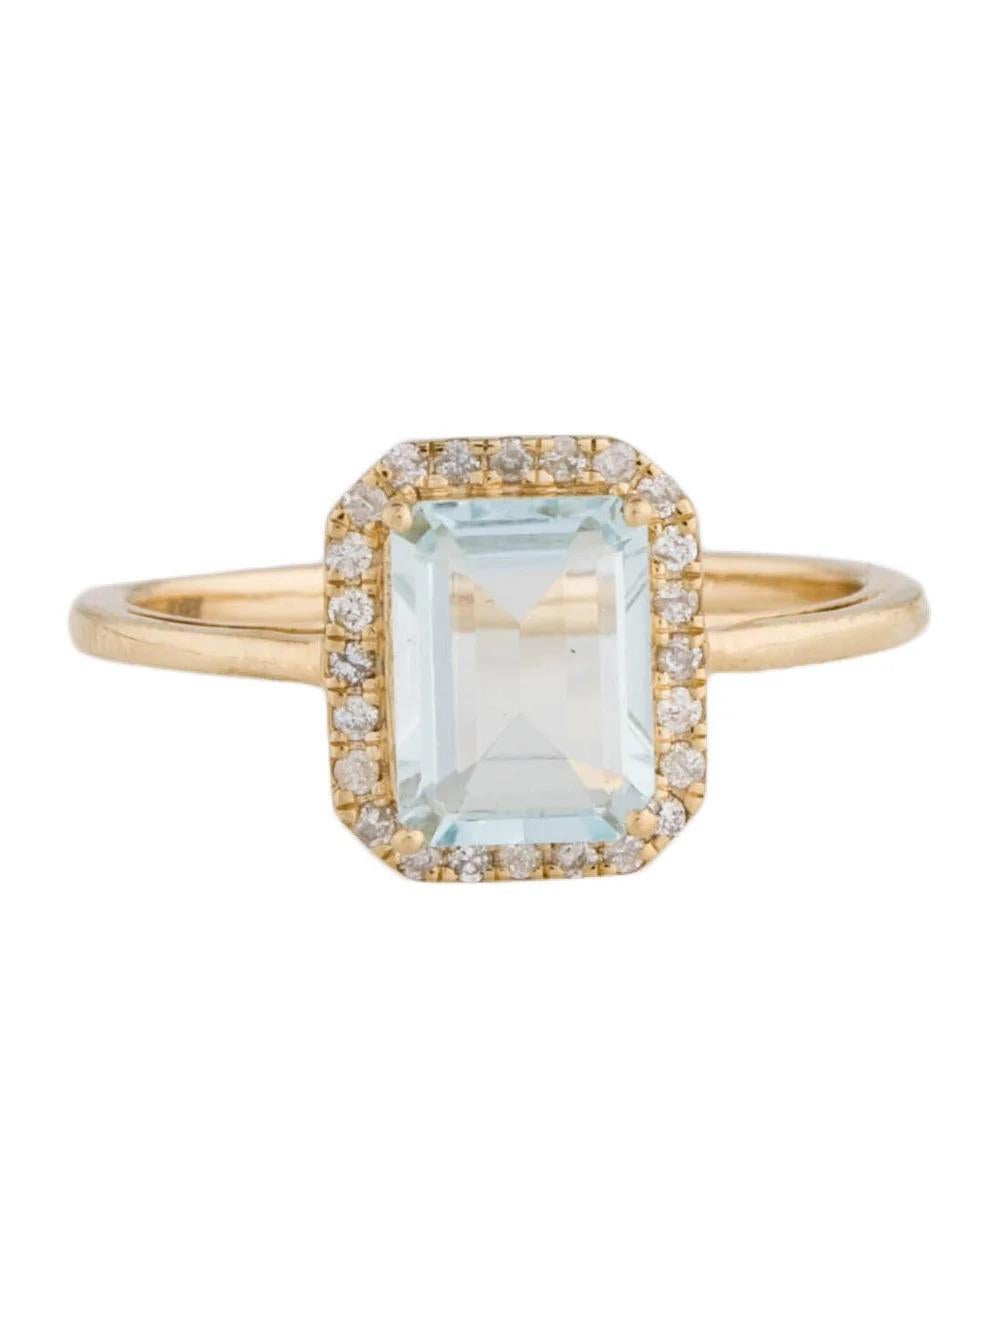 Emerald Cut 14K Aquamarine & Diamond Halo Ring 1.34ct - Size 7 - Elegant Blue Gemstone